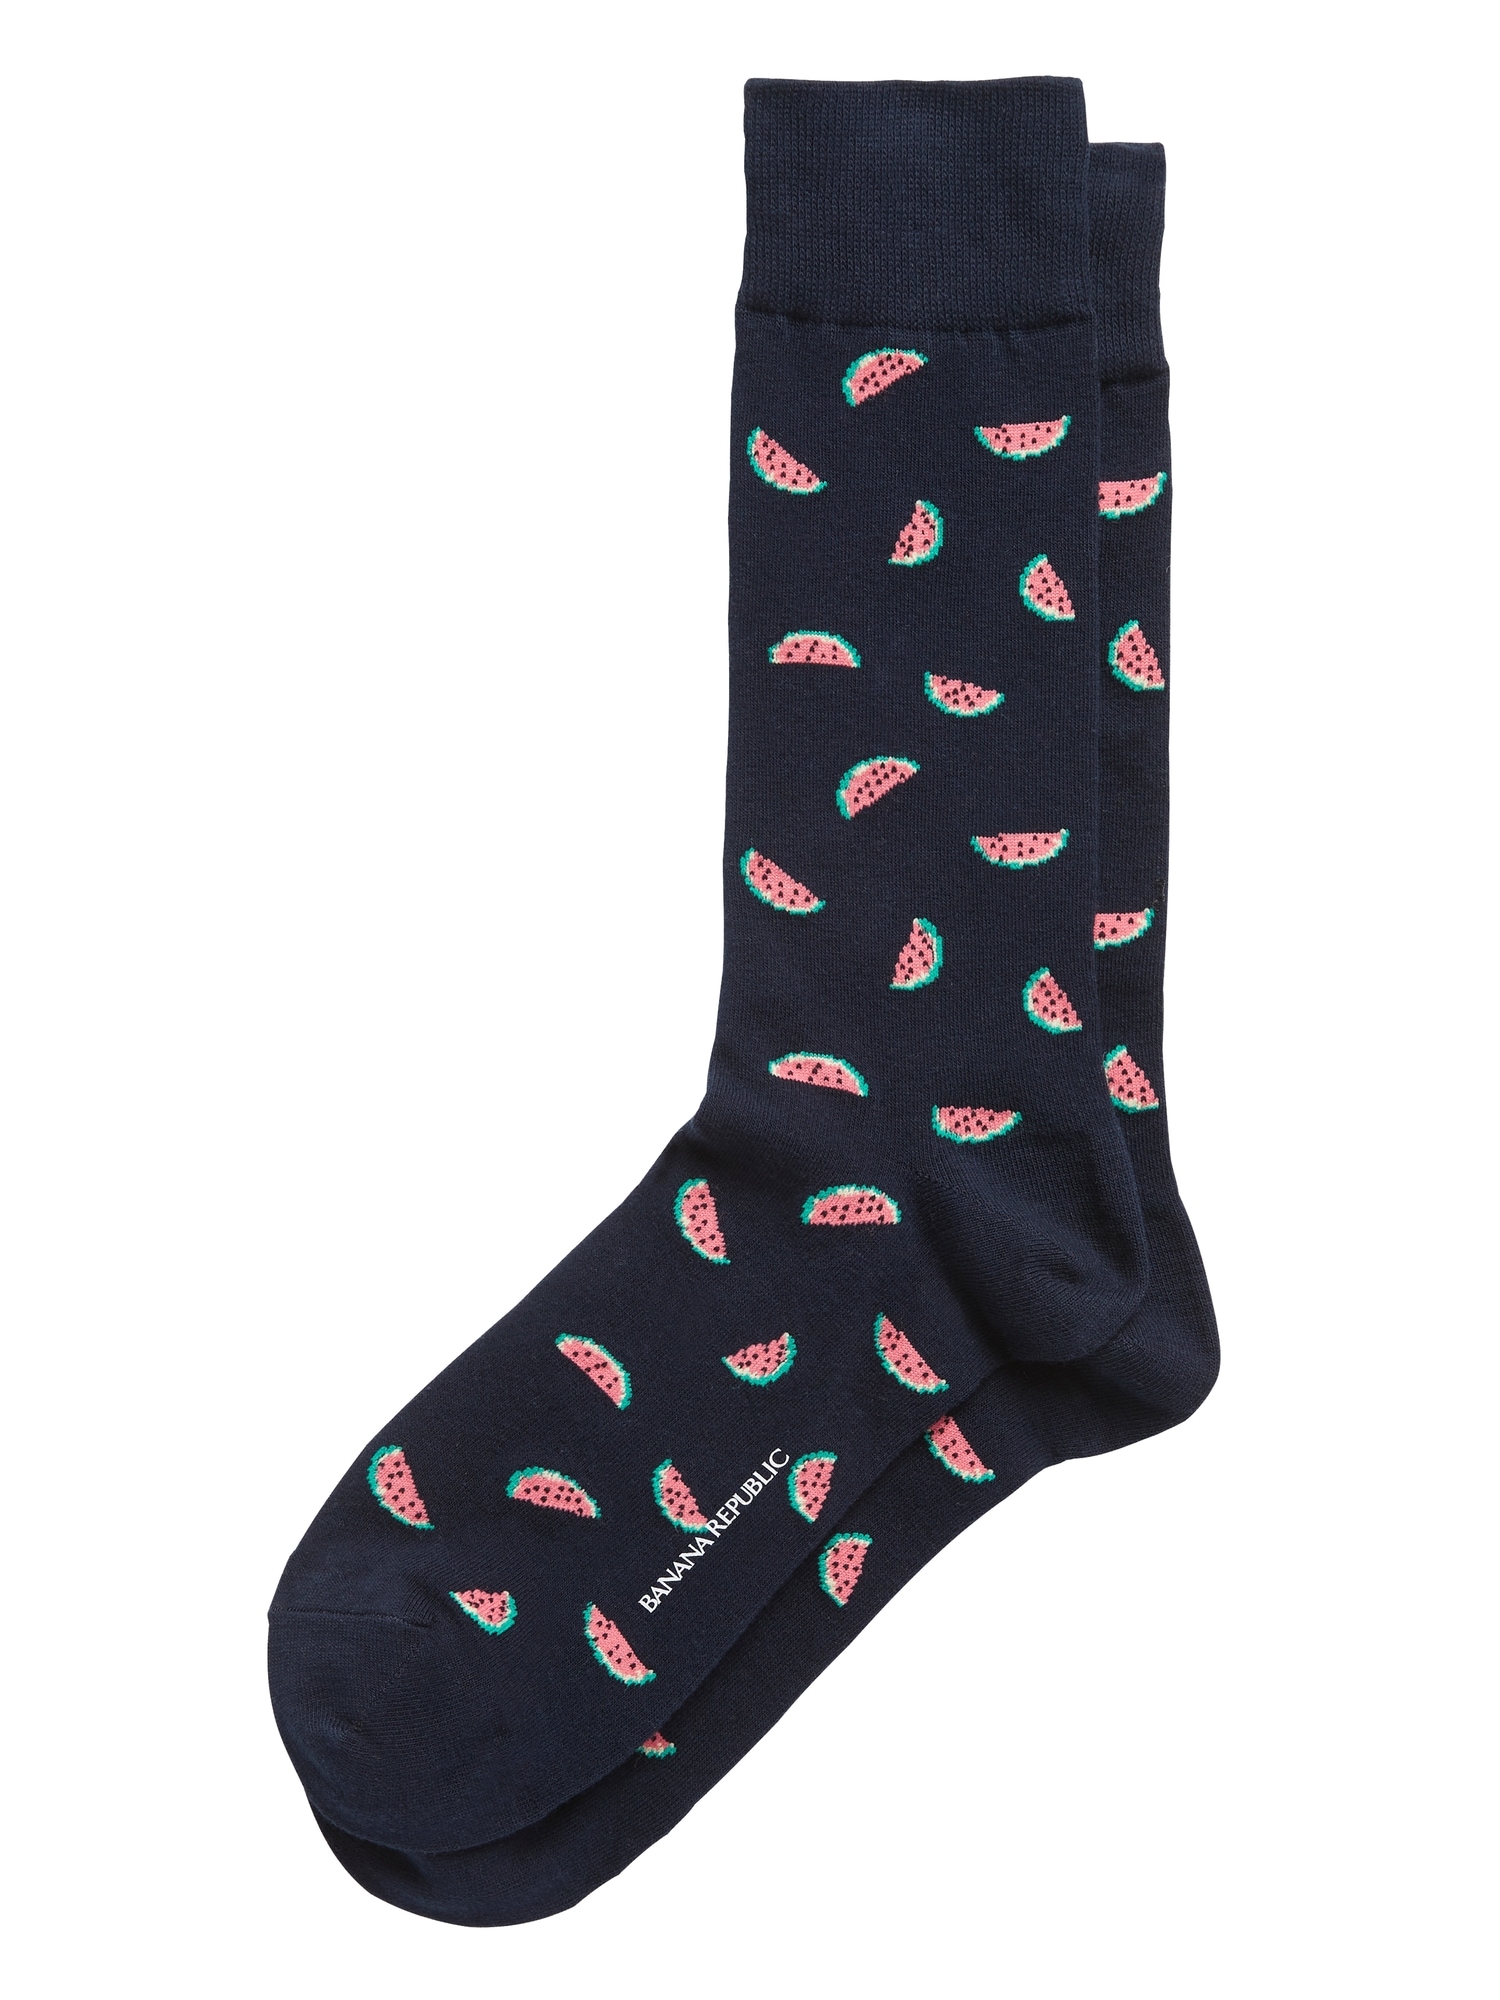 Watermelon Sock